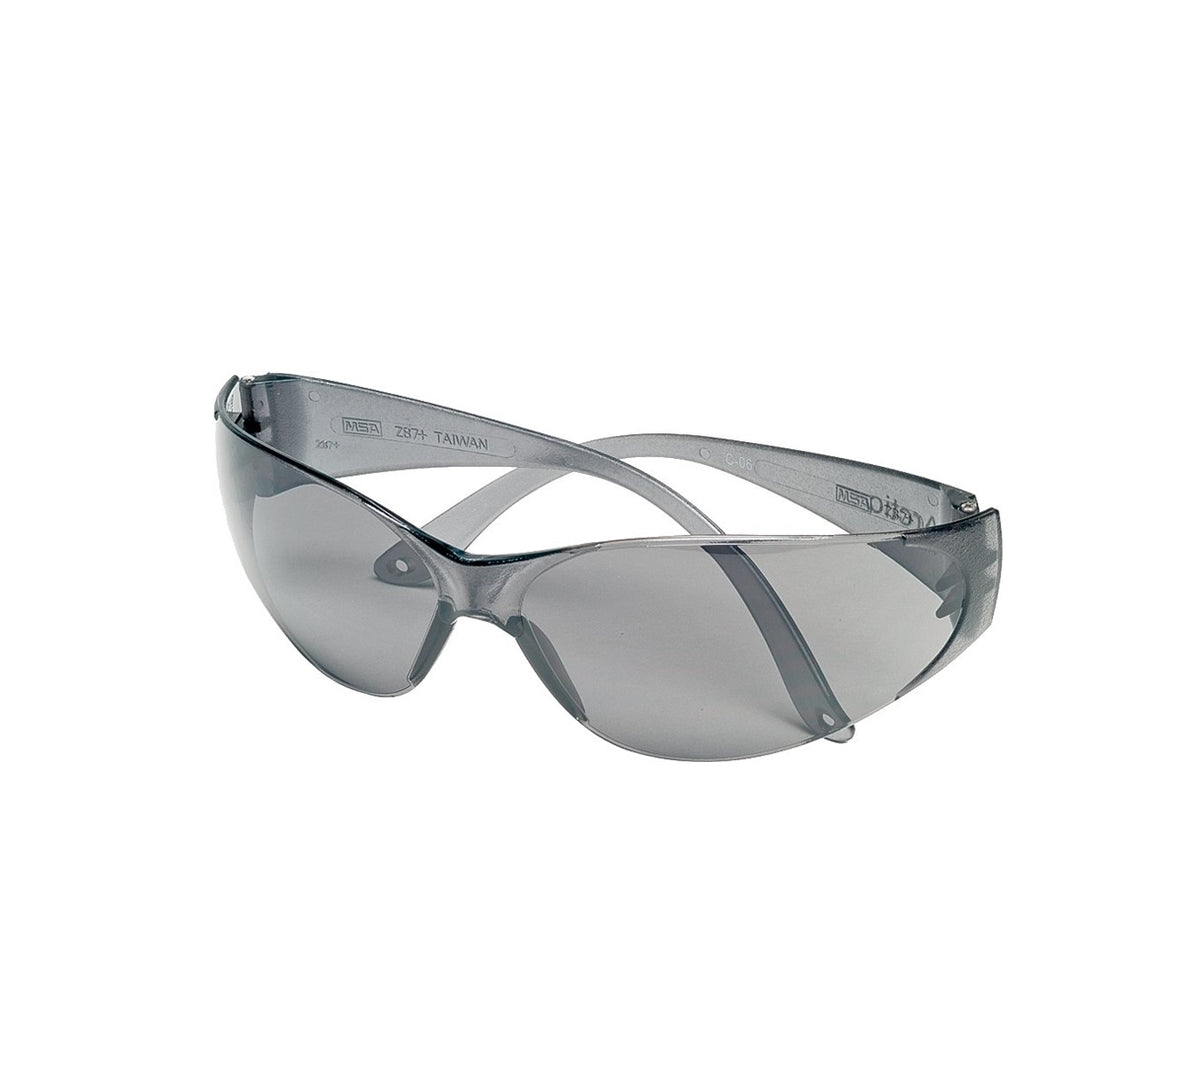 MSA 697515 Safety Glasses, Anti-Scratch Lens, Polycarbonate Lens